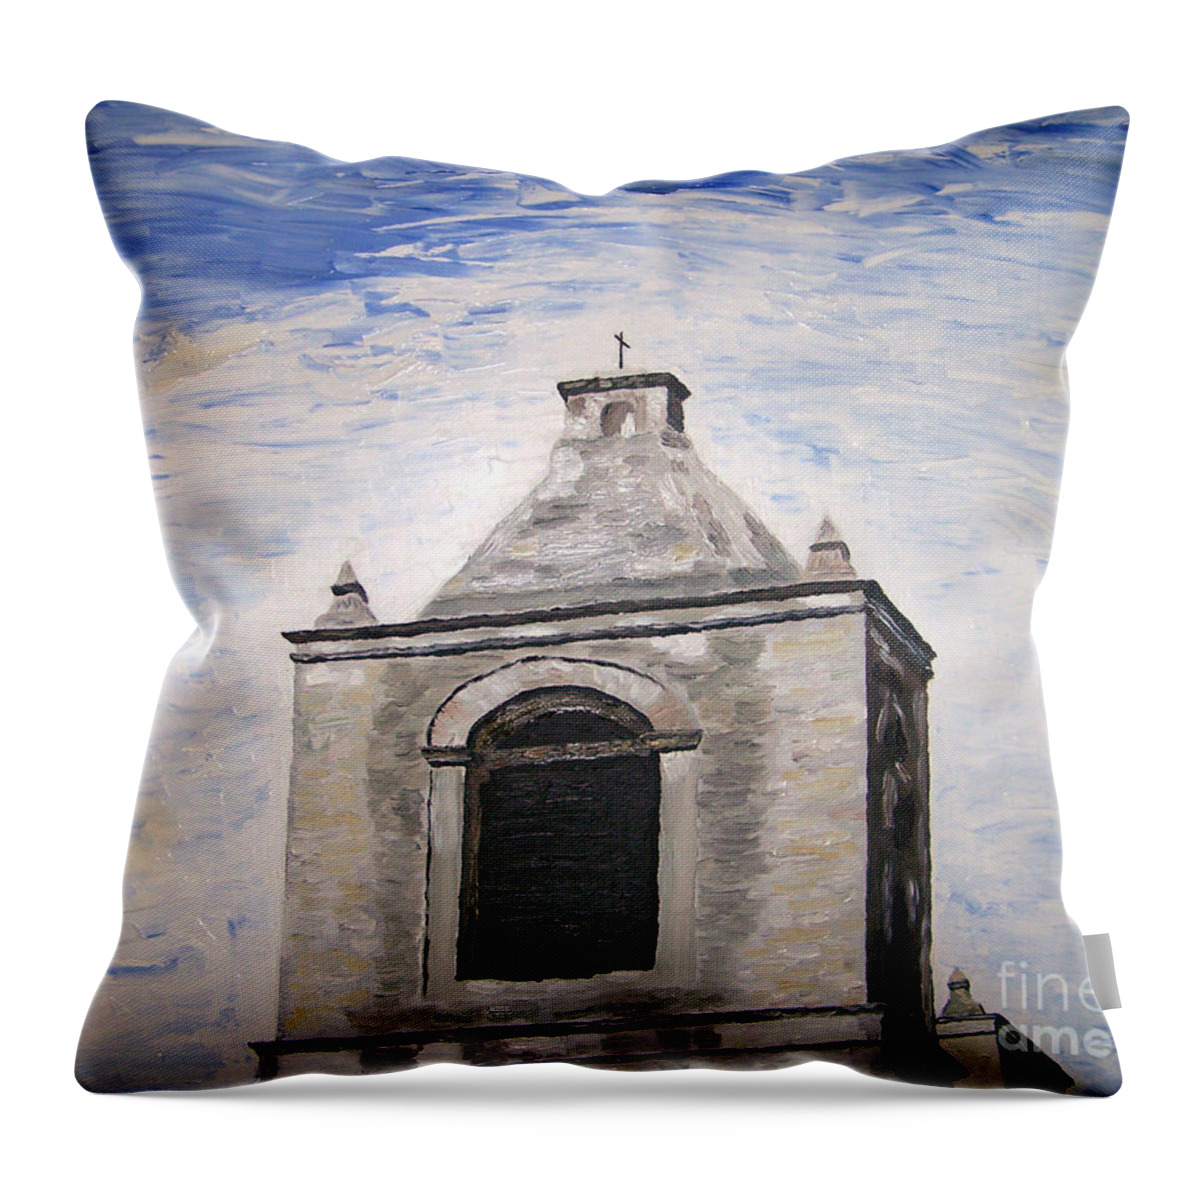 San Antonio Throw Pillow featuring the painting San Antonio Belltower by Kevin Croitz